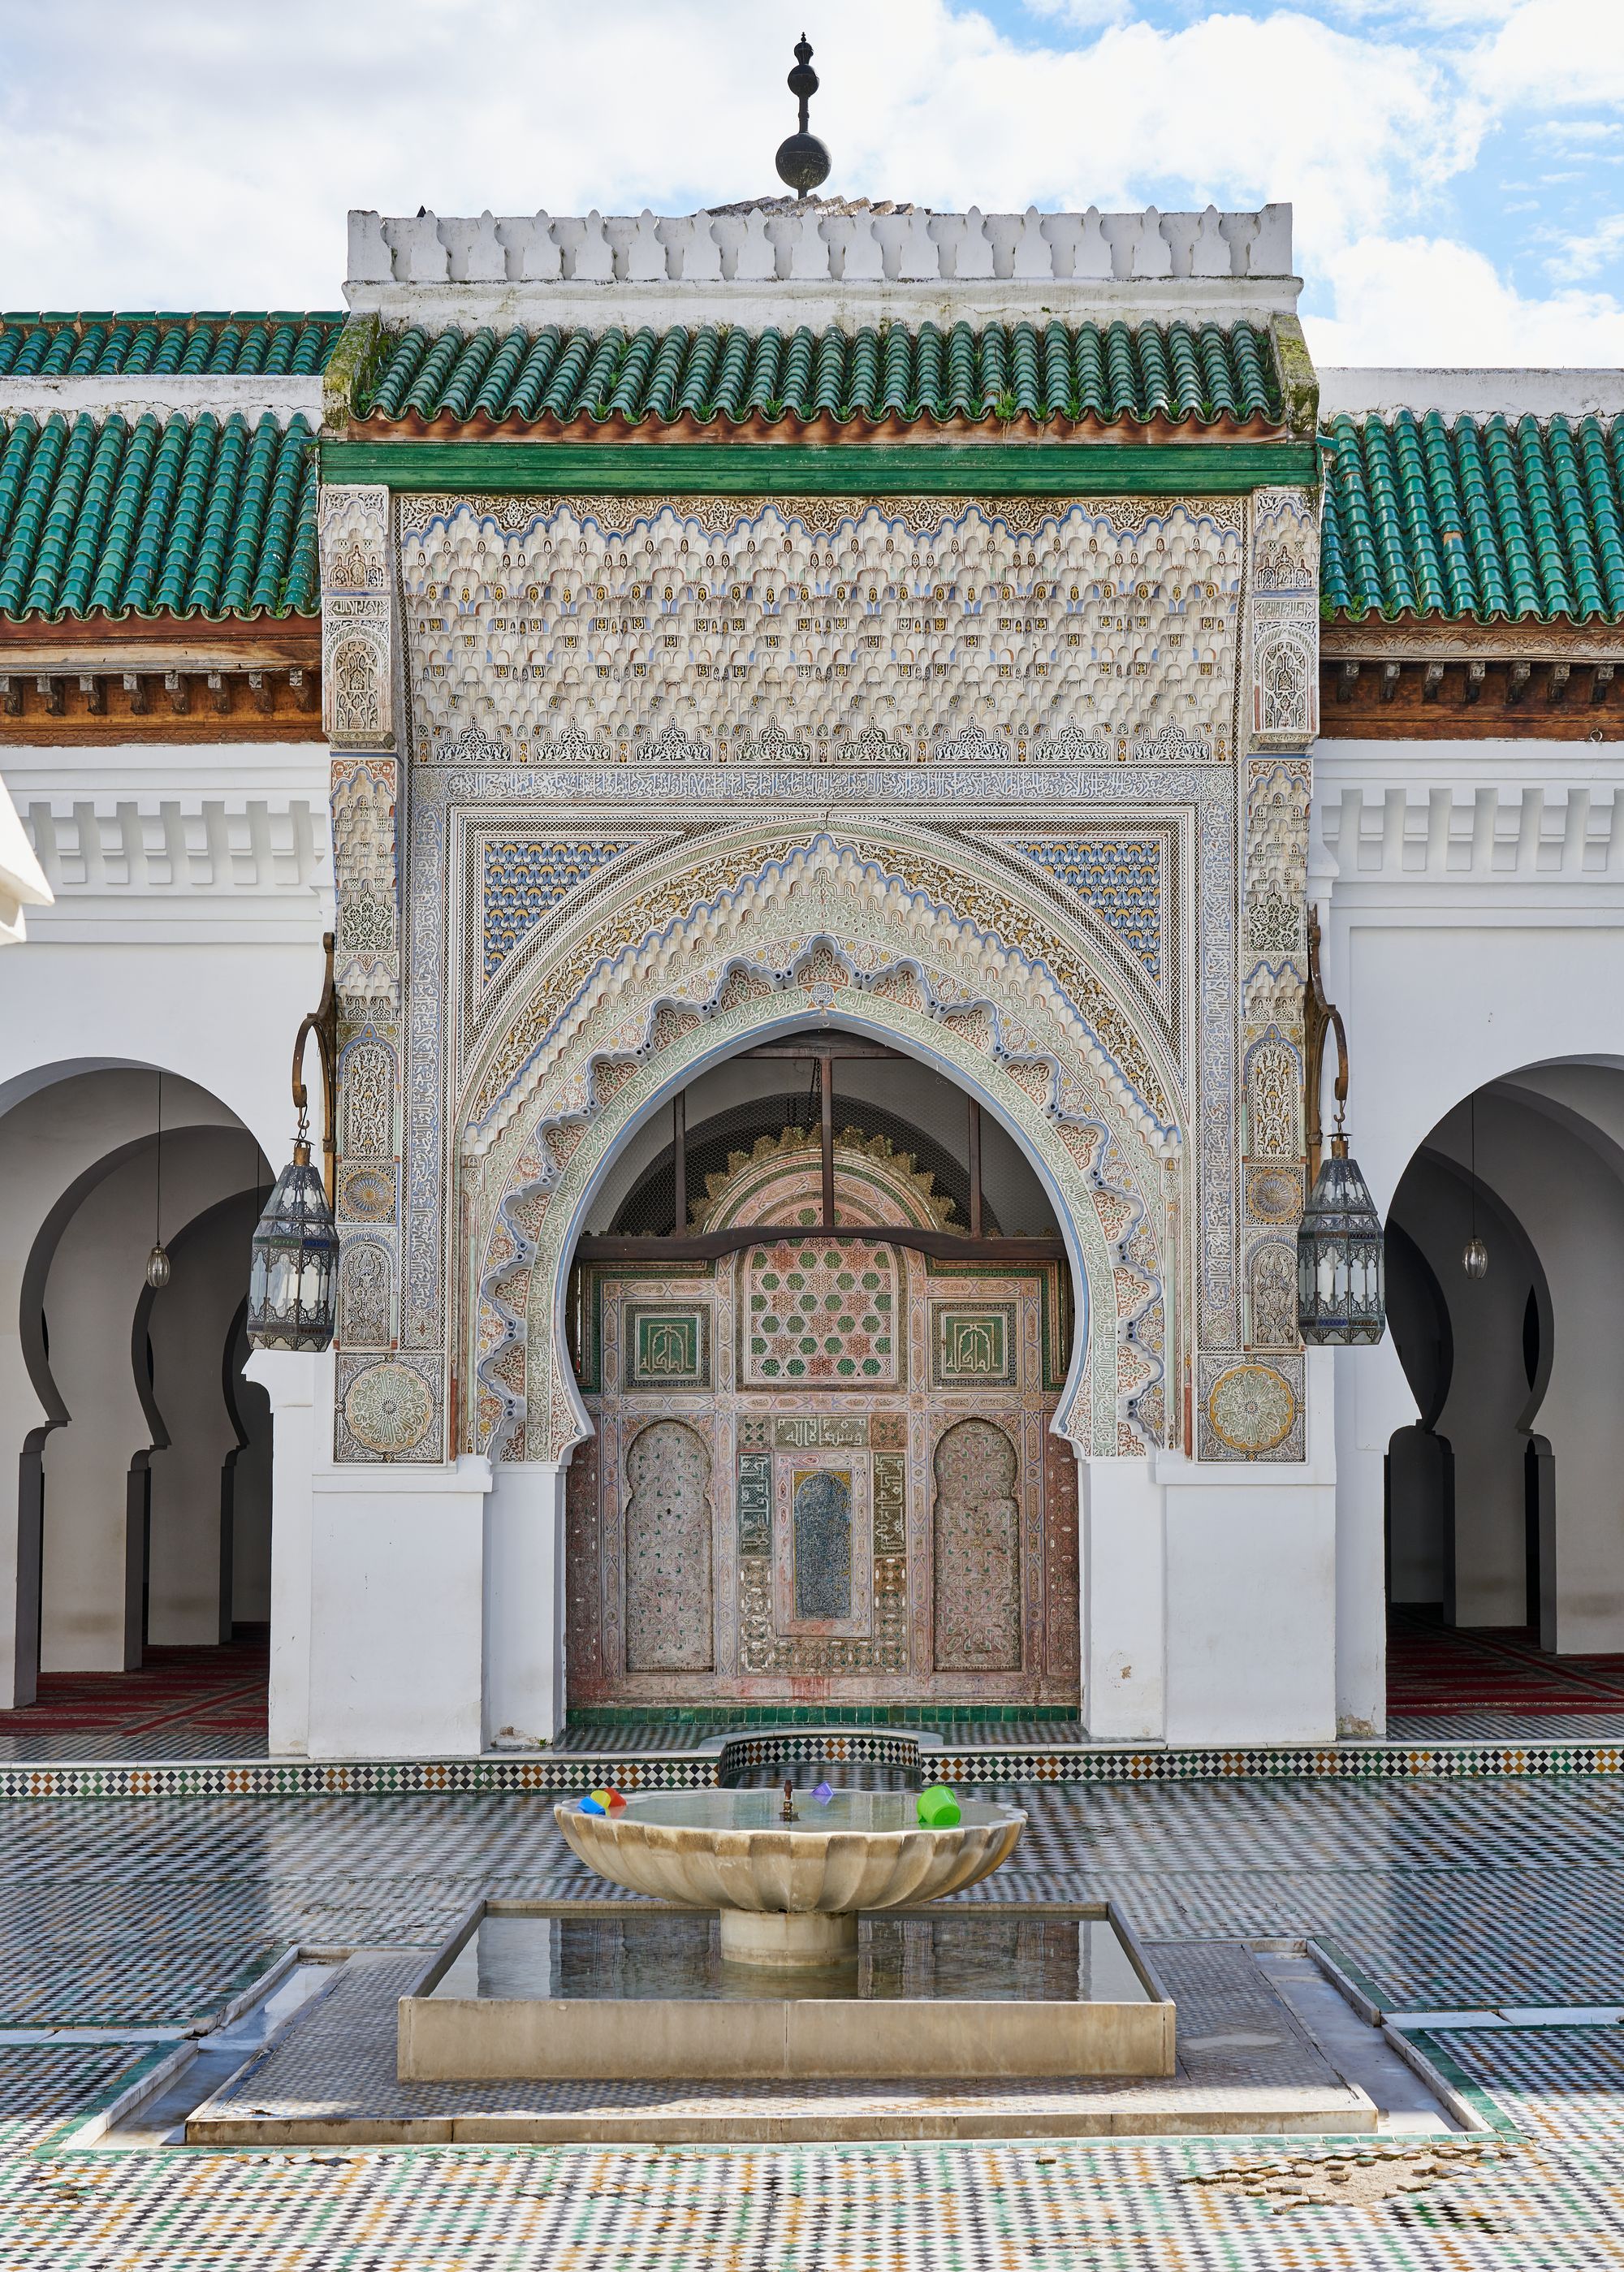 The Mosque of al-Qarawiyyin courtyard